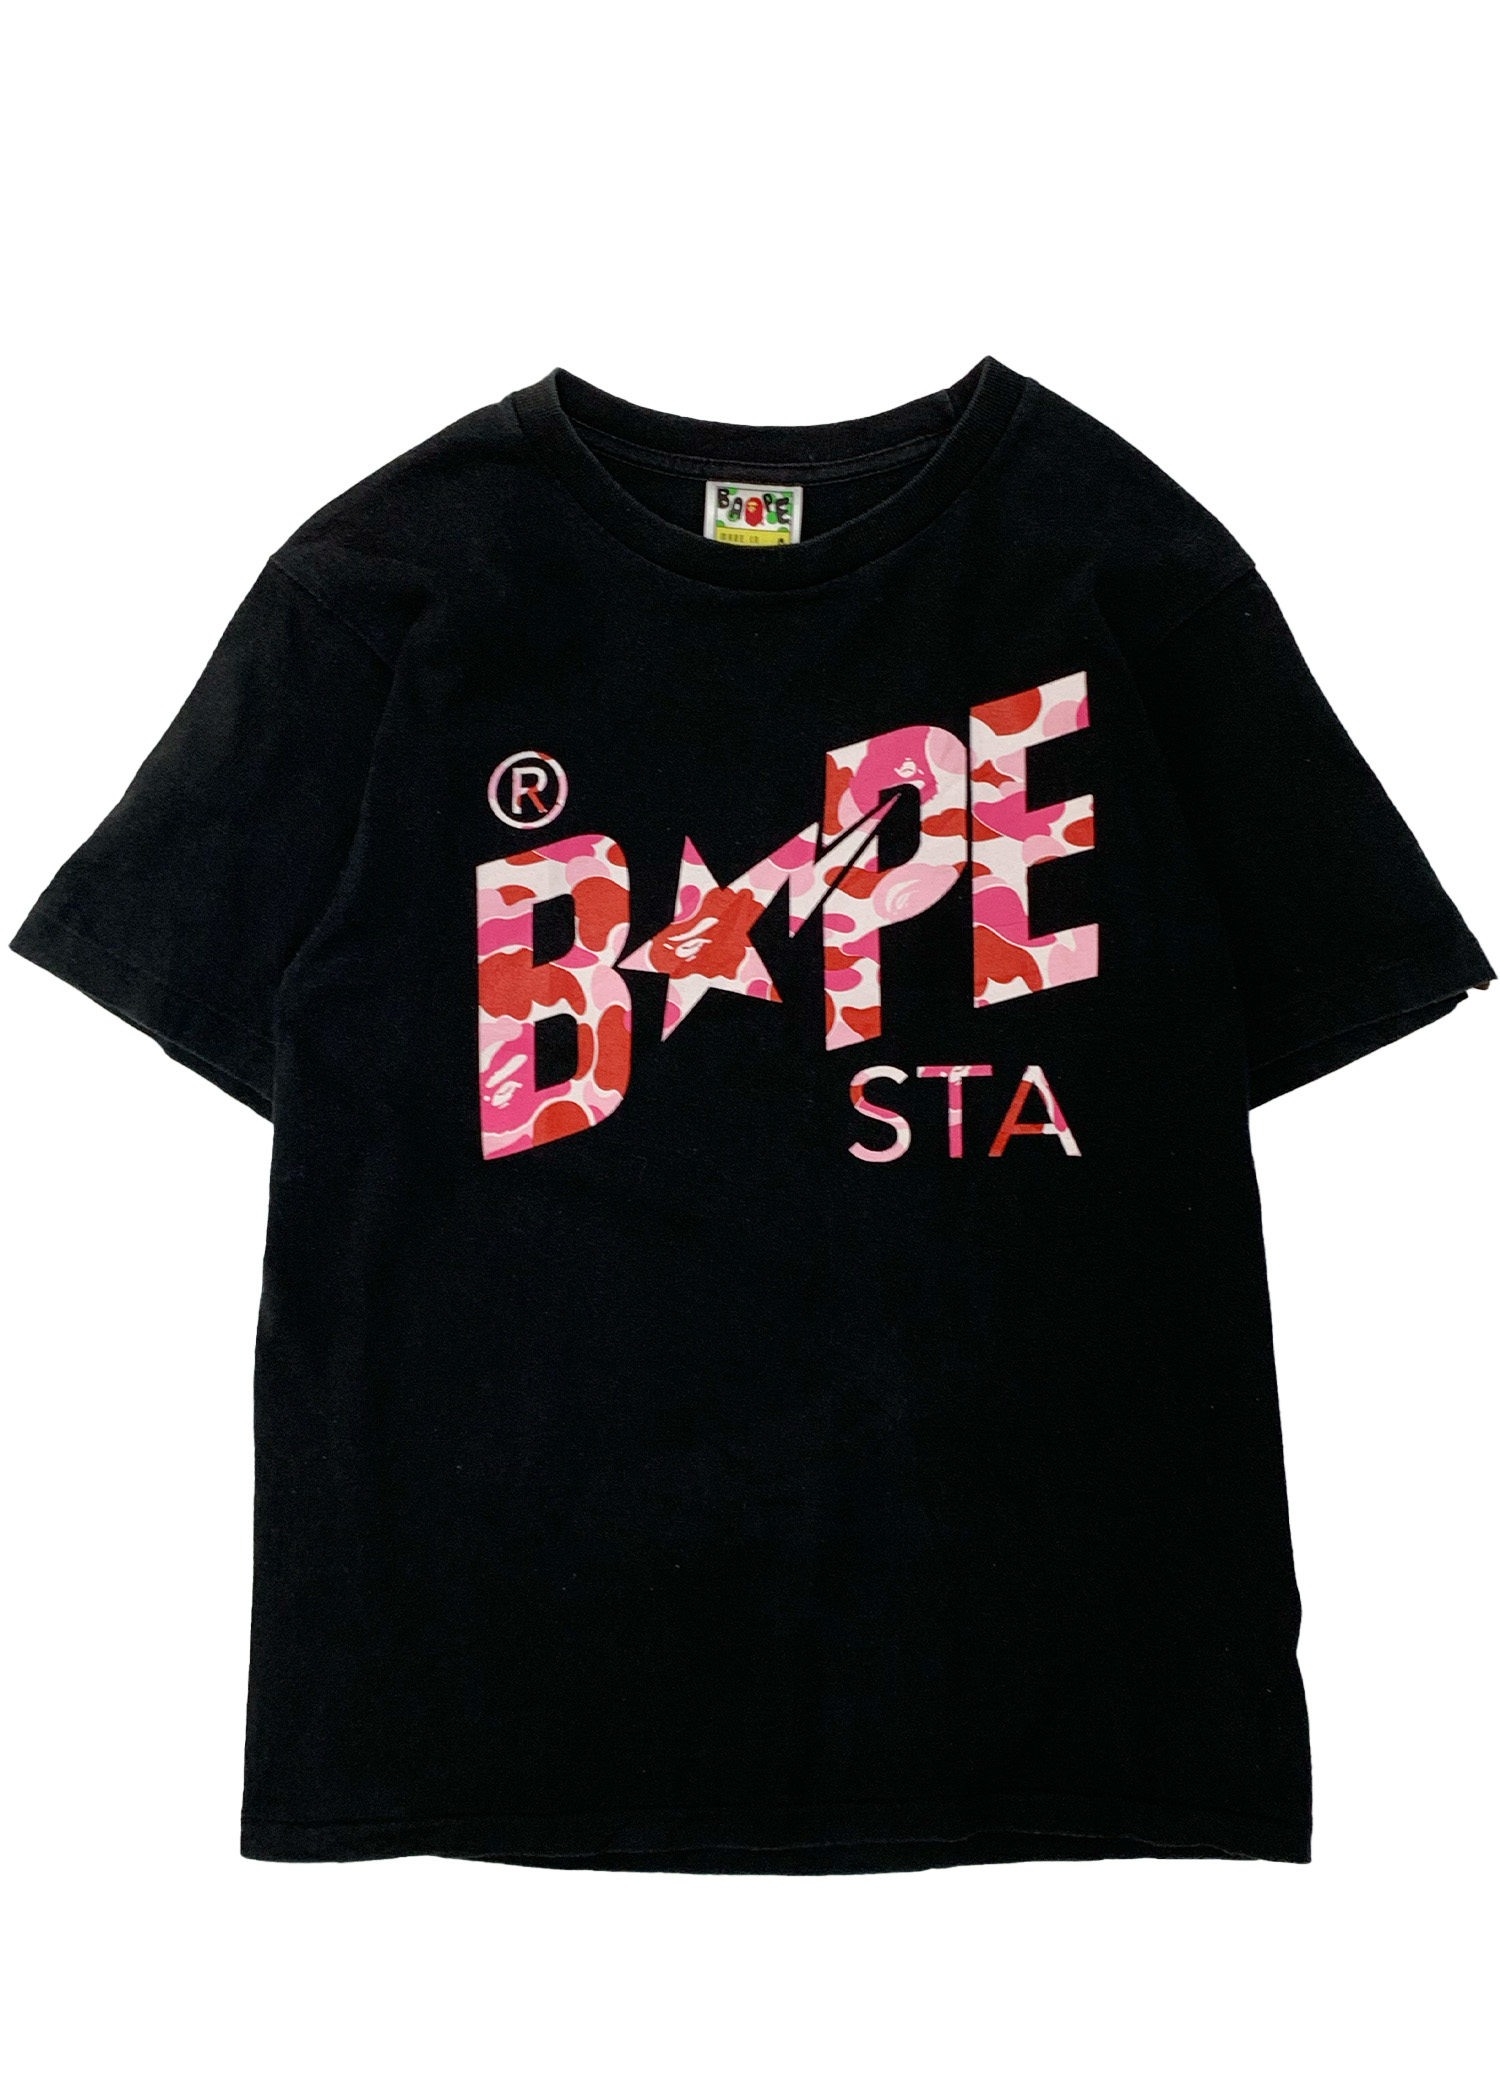 BAPE OG STA t-shirts